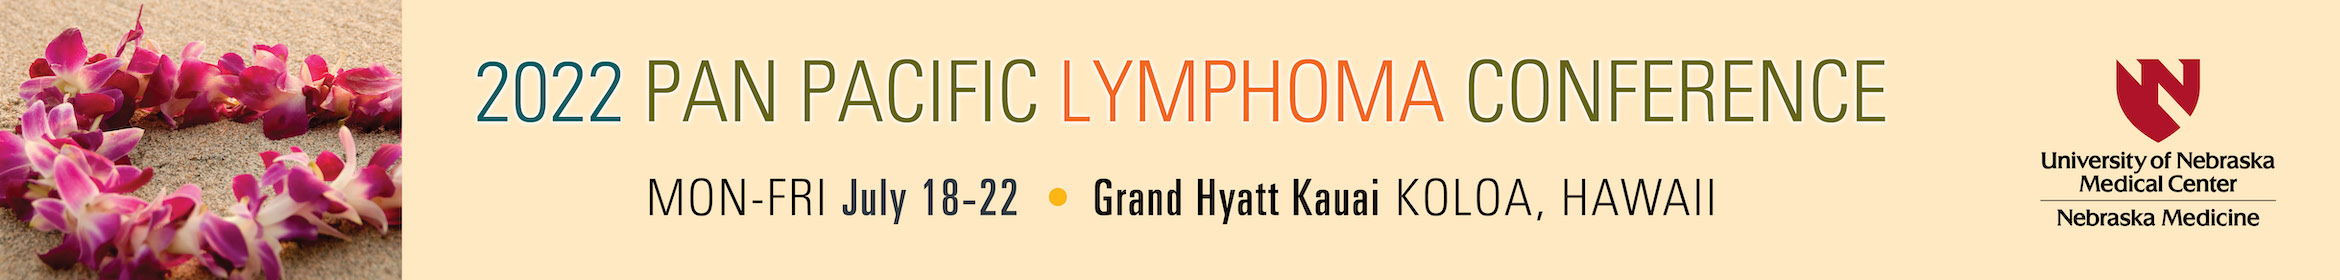 2022 Pan Pacific Lymphoma Conference Main banner